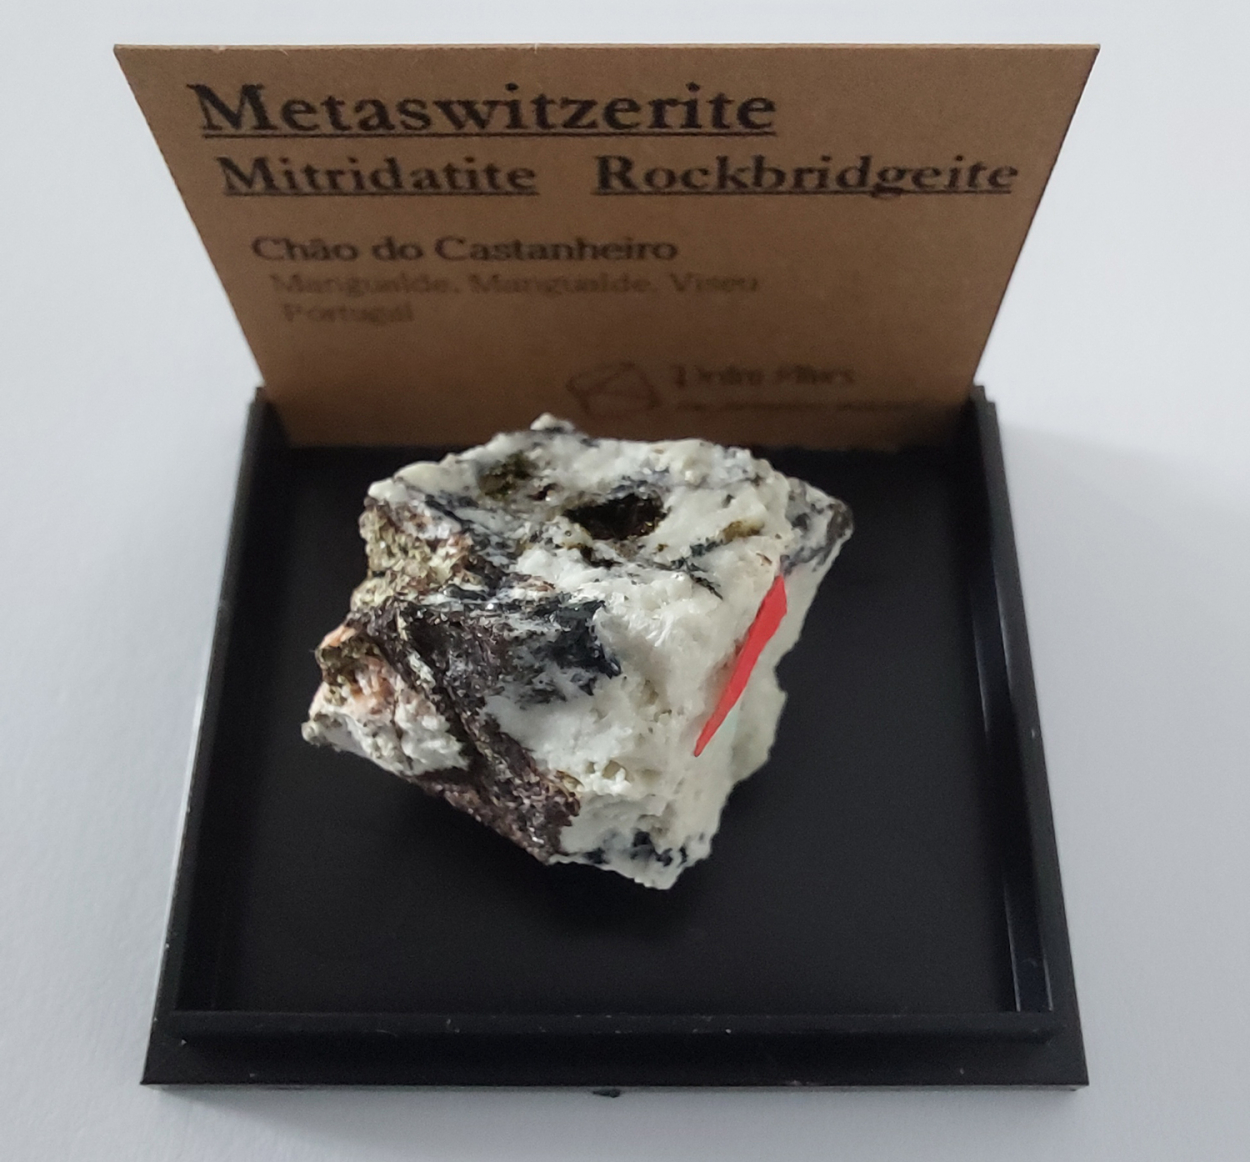 Metaswitzerite Mitridatite Rockbridgeite